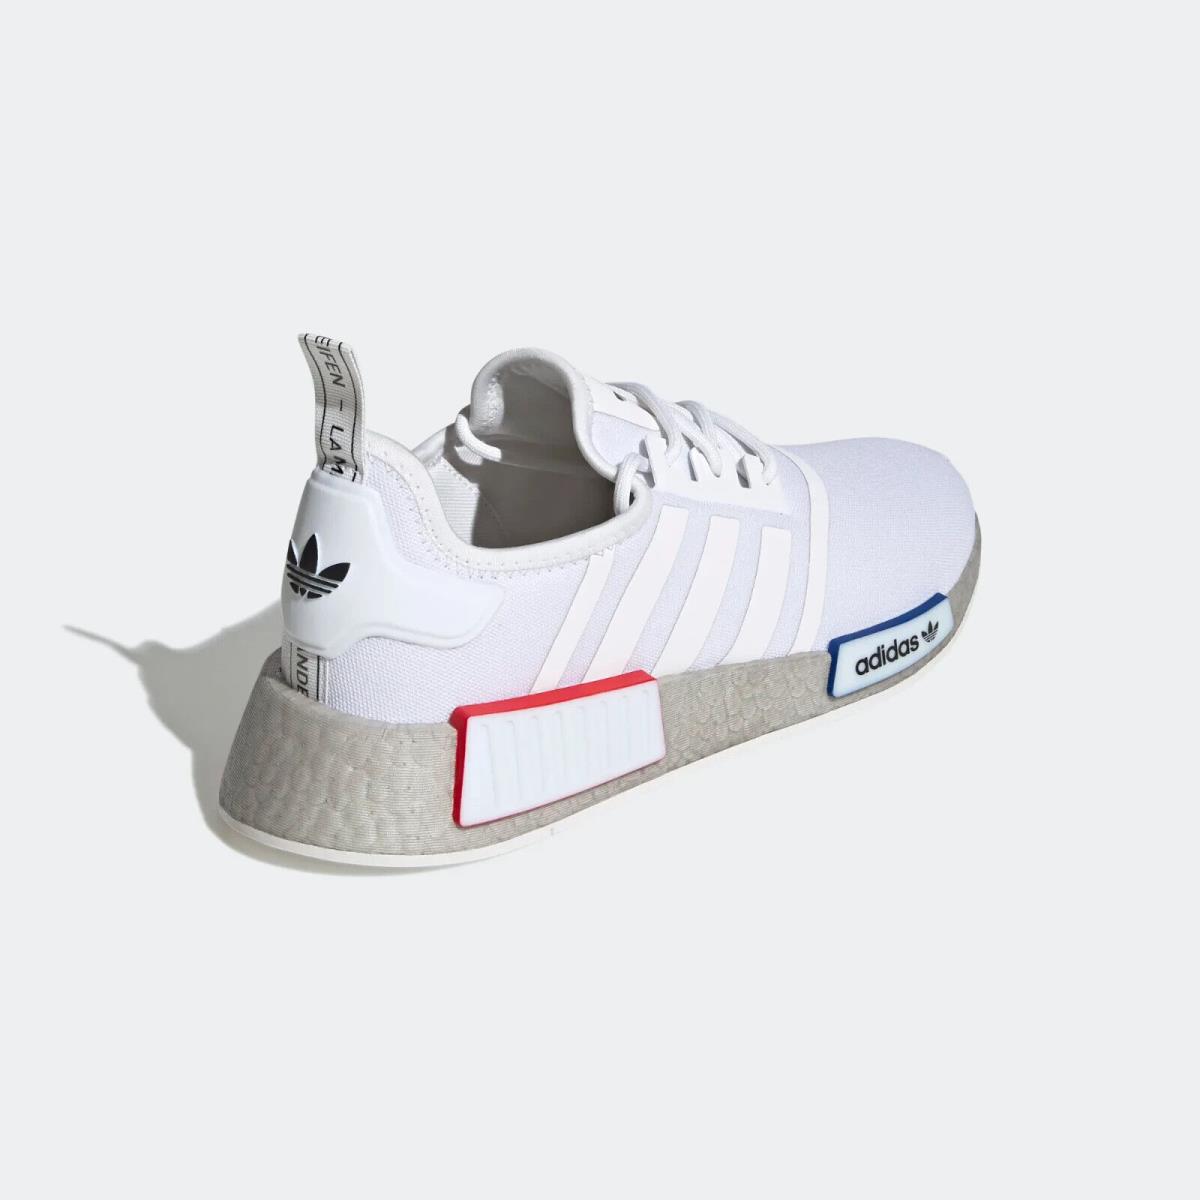 Adidas Nmd Casual Shoes White / Grey / / Blue Sz 9.5 GX9525 692740341248 - Adidas shoes NMD - White | SporTipTop